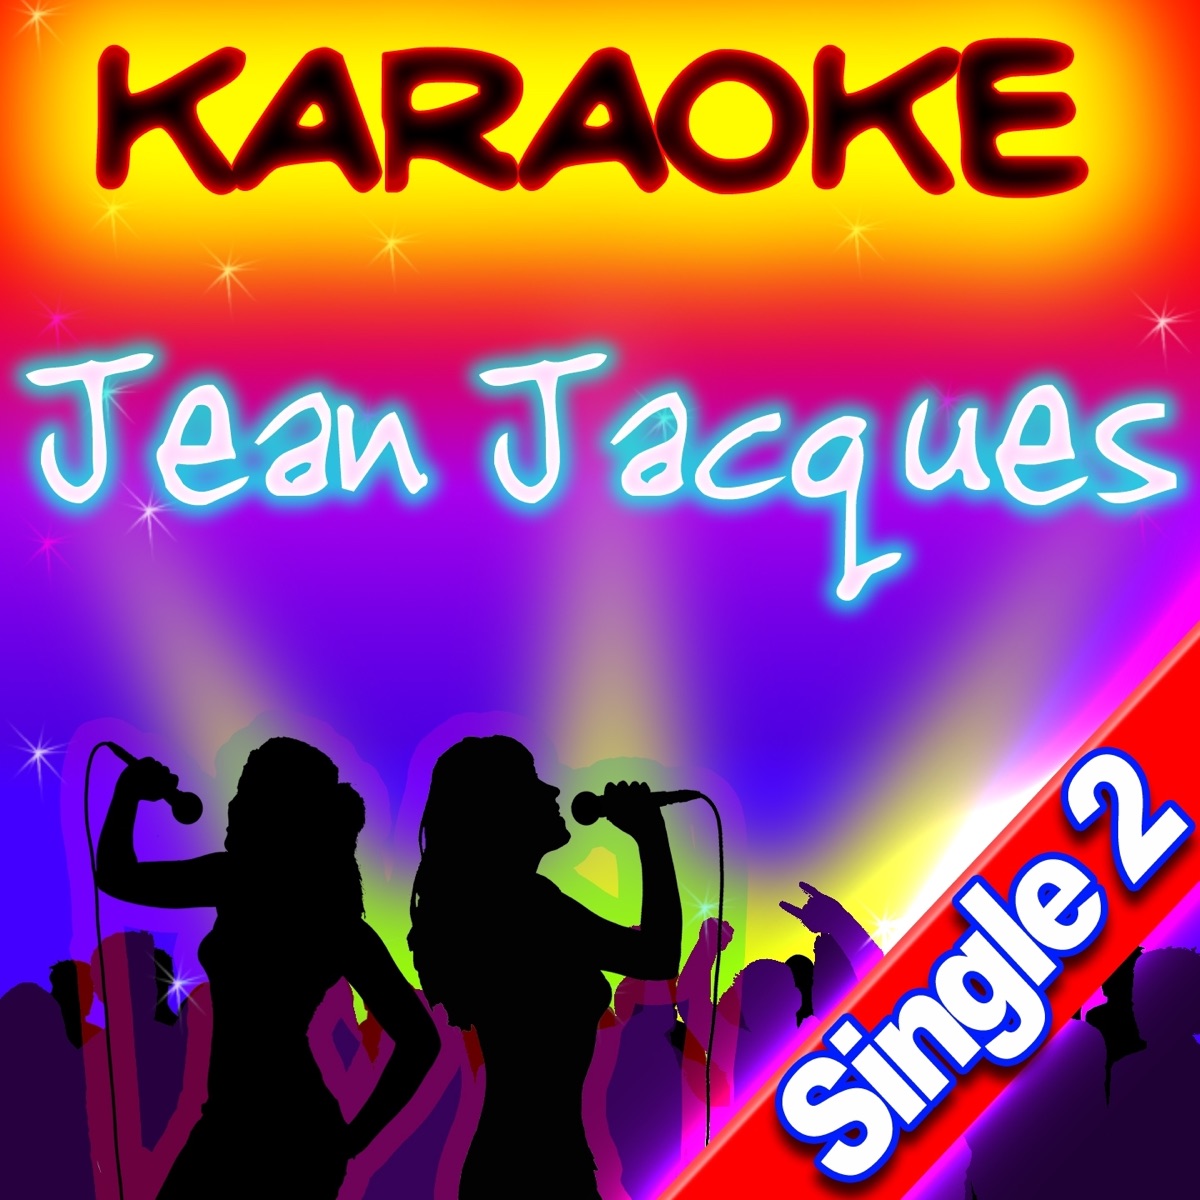 Jean Jacques karaoké, vol. 3 - Single by Versaillesstation on Apple Music